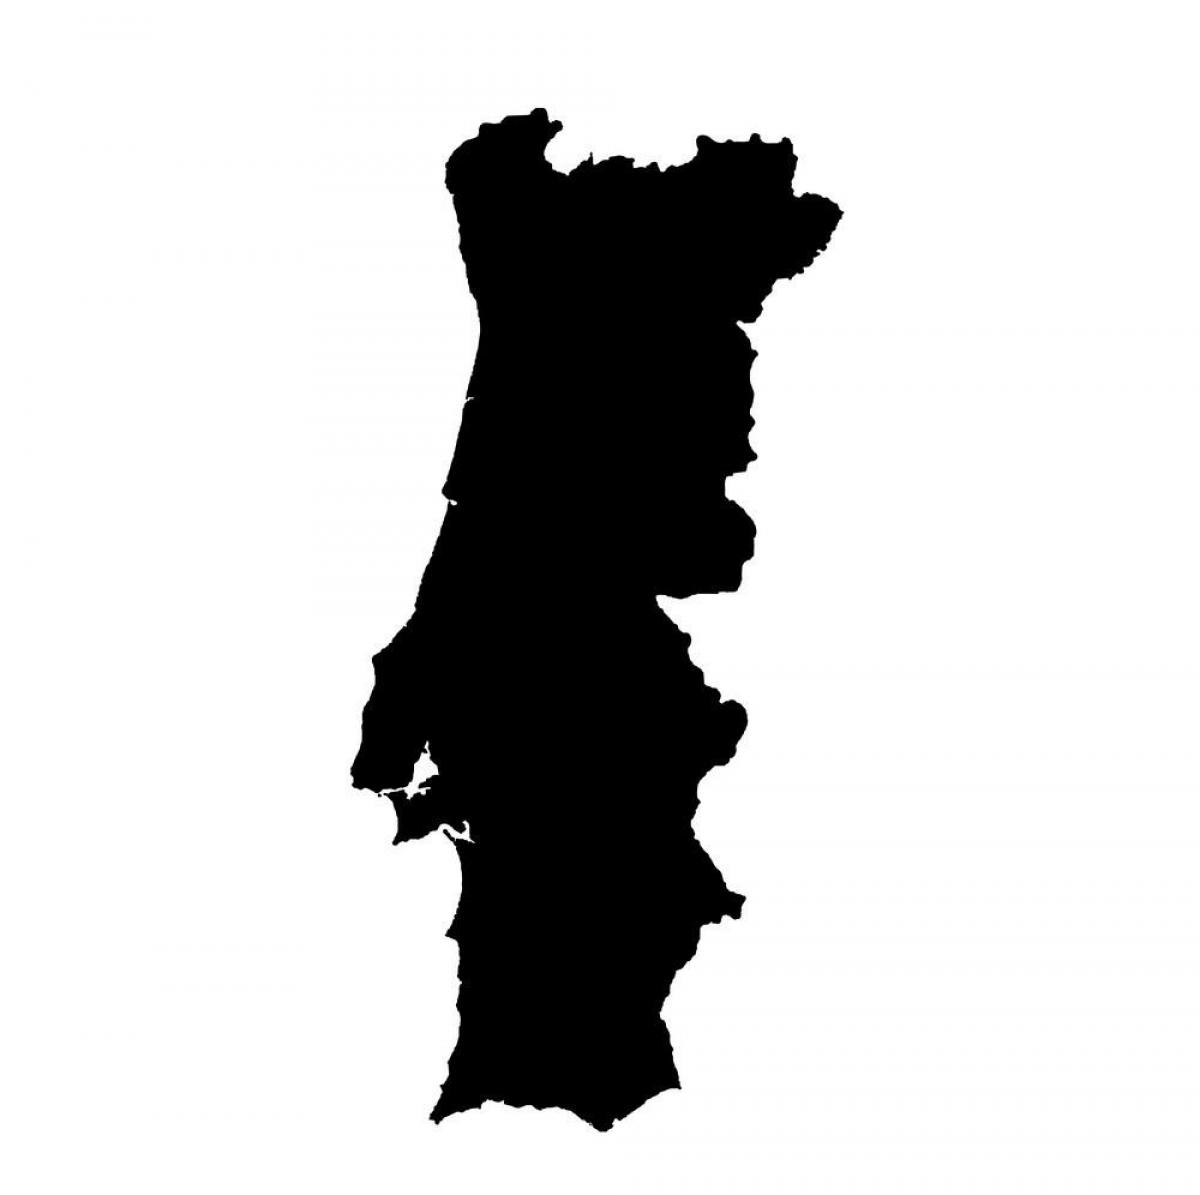 Mapa vectorial de Portugal